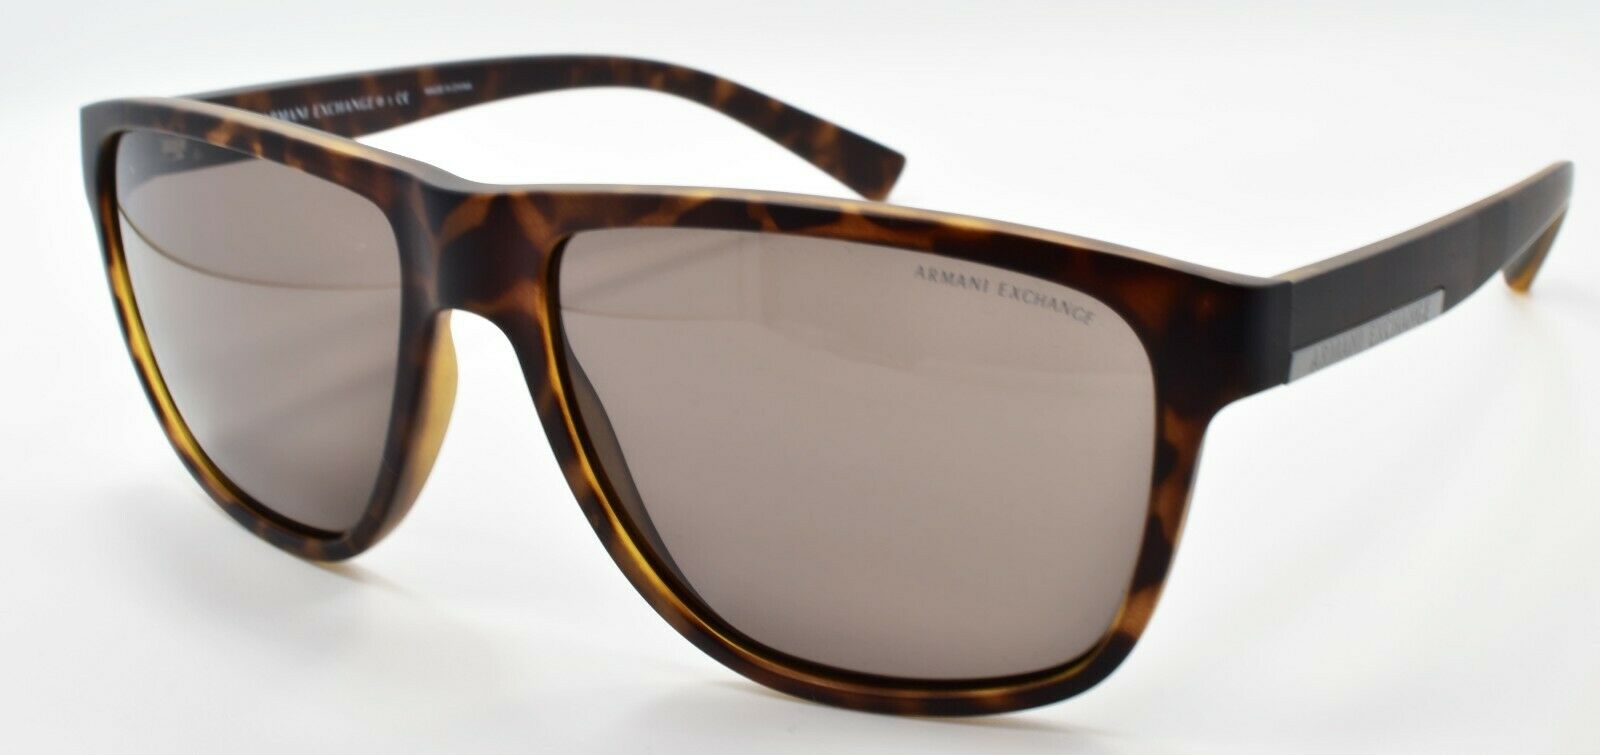 1-Armani Exchange AX4052S 802973 Men's Sunglasses 58-16-140 Tortoise / Brown-8053672540406-IKSpecs